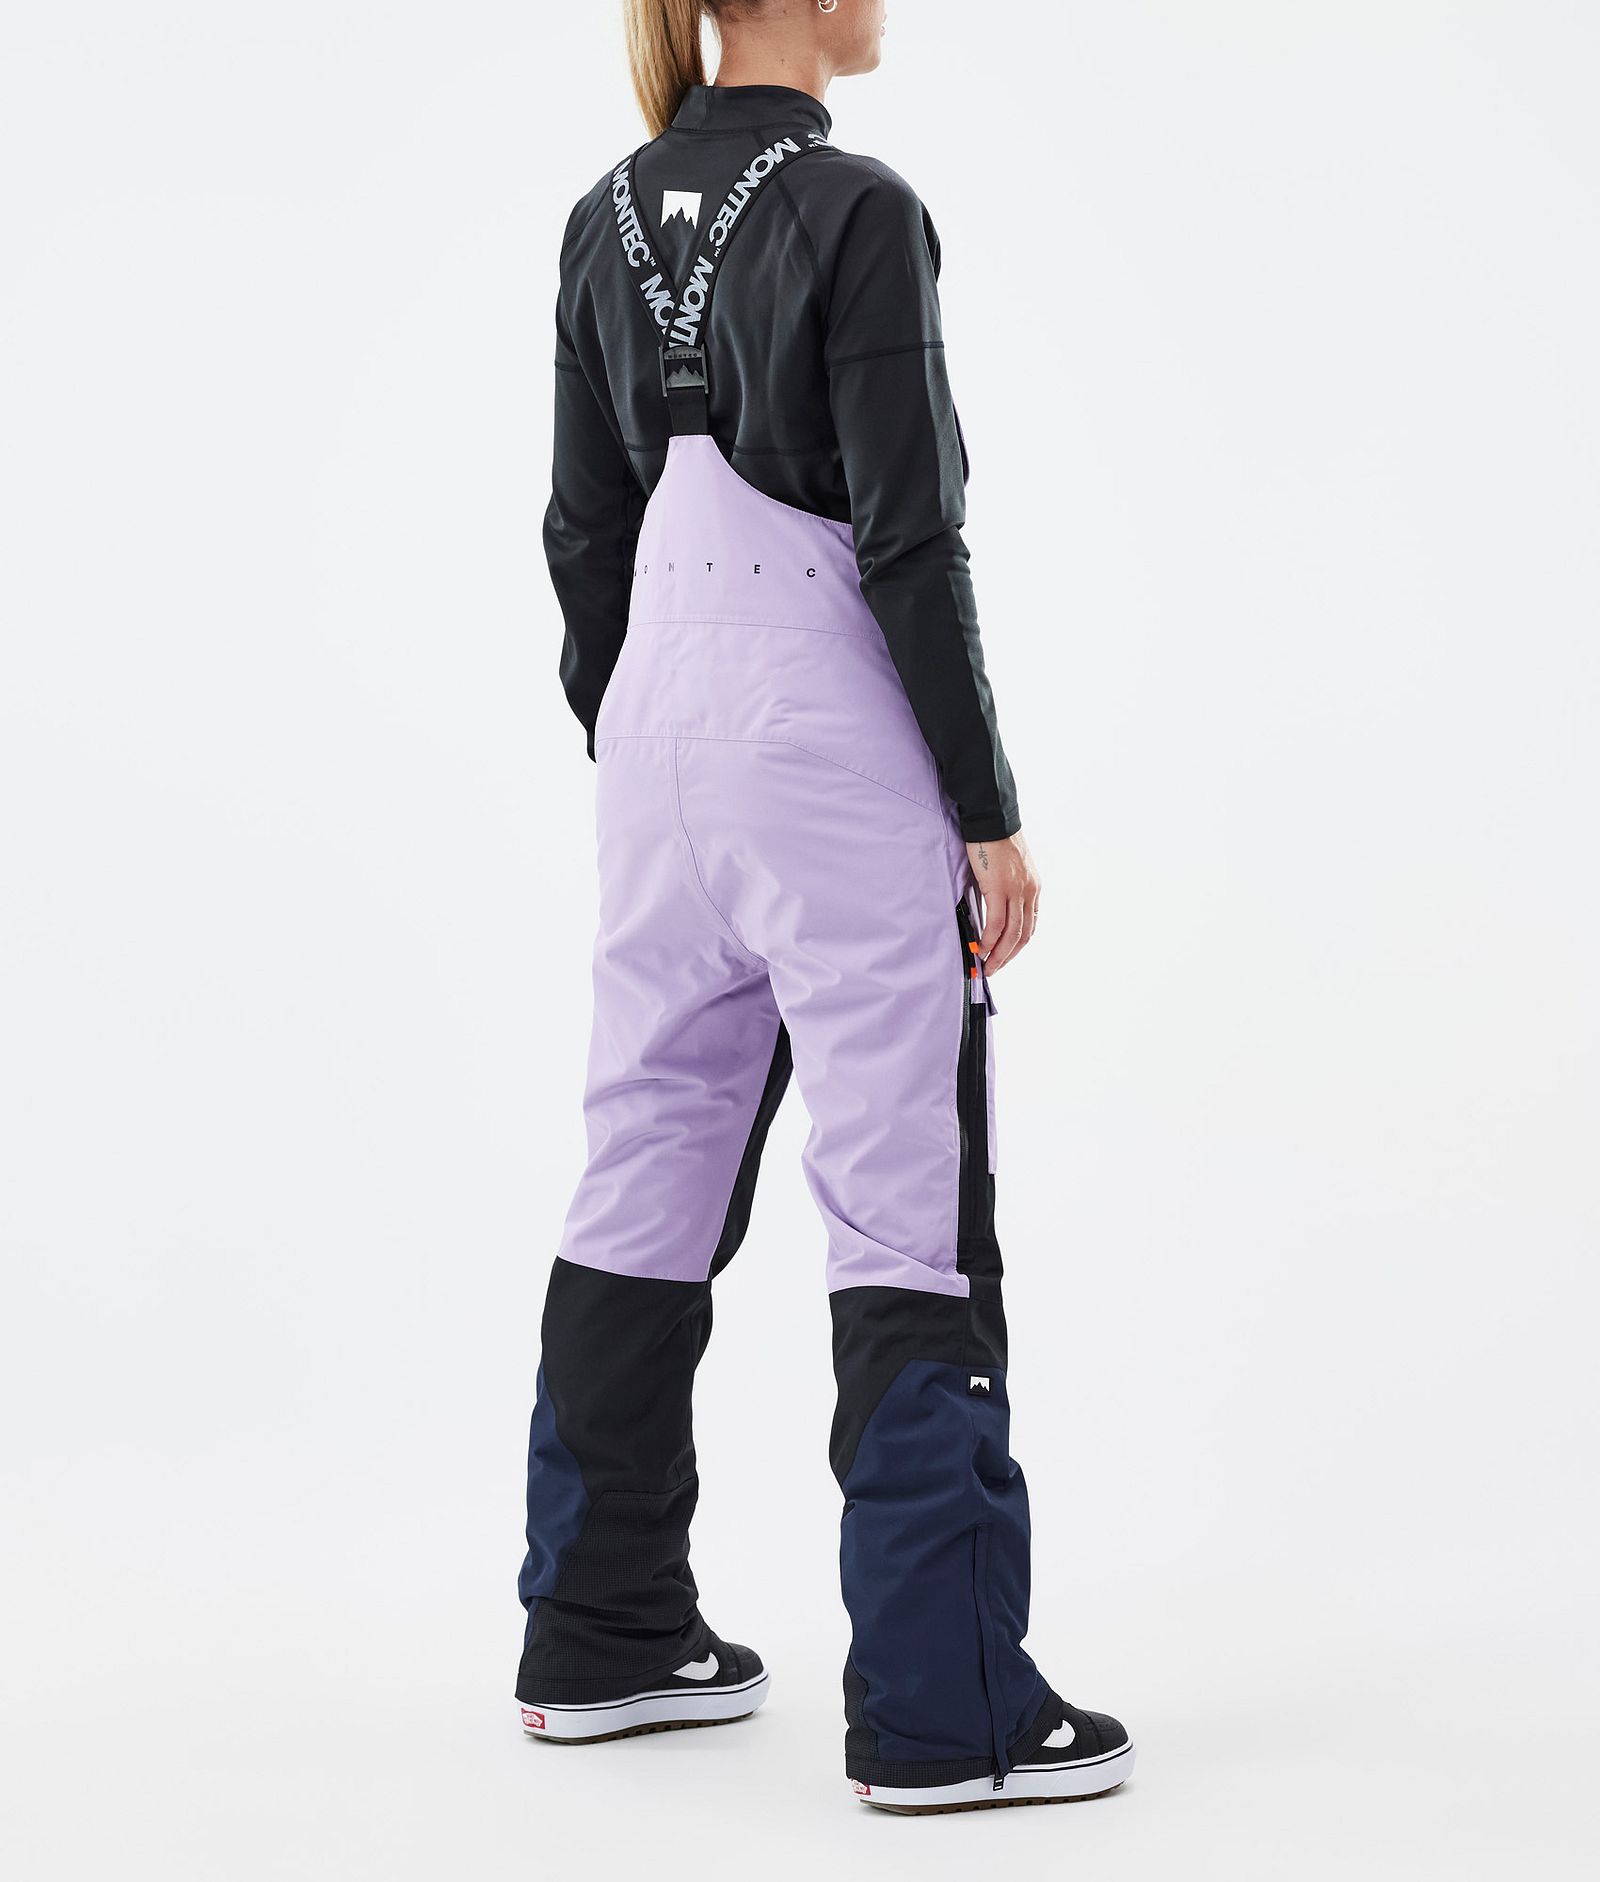 Montec Fawk W Pantalon de Snowboard Femme Faded Violet/Black/Dark Blue